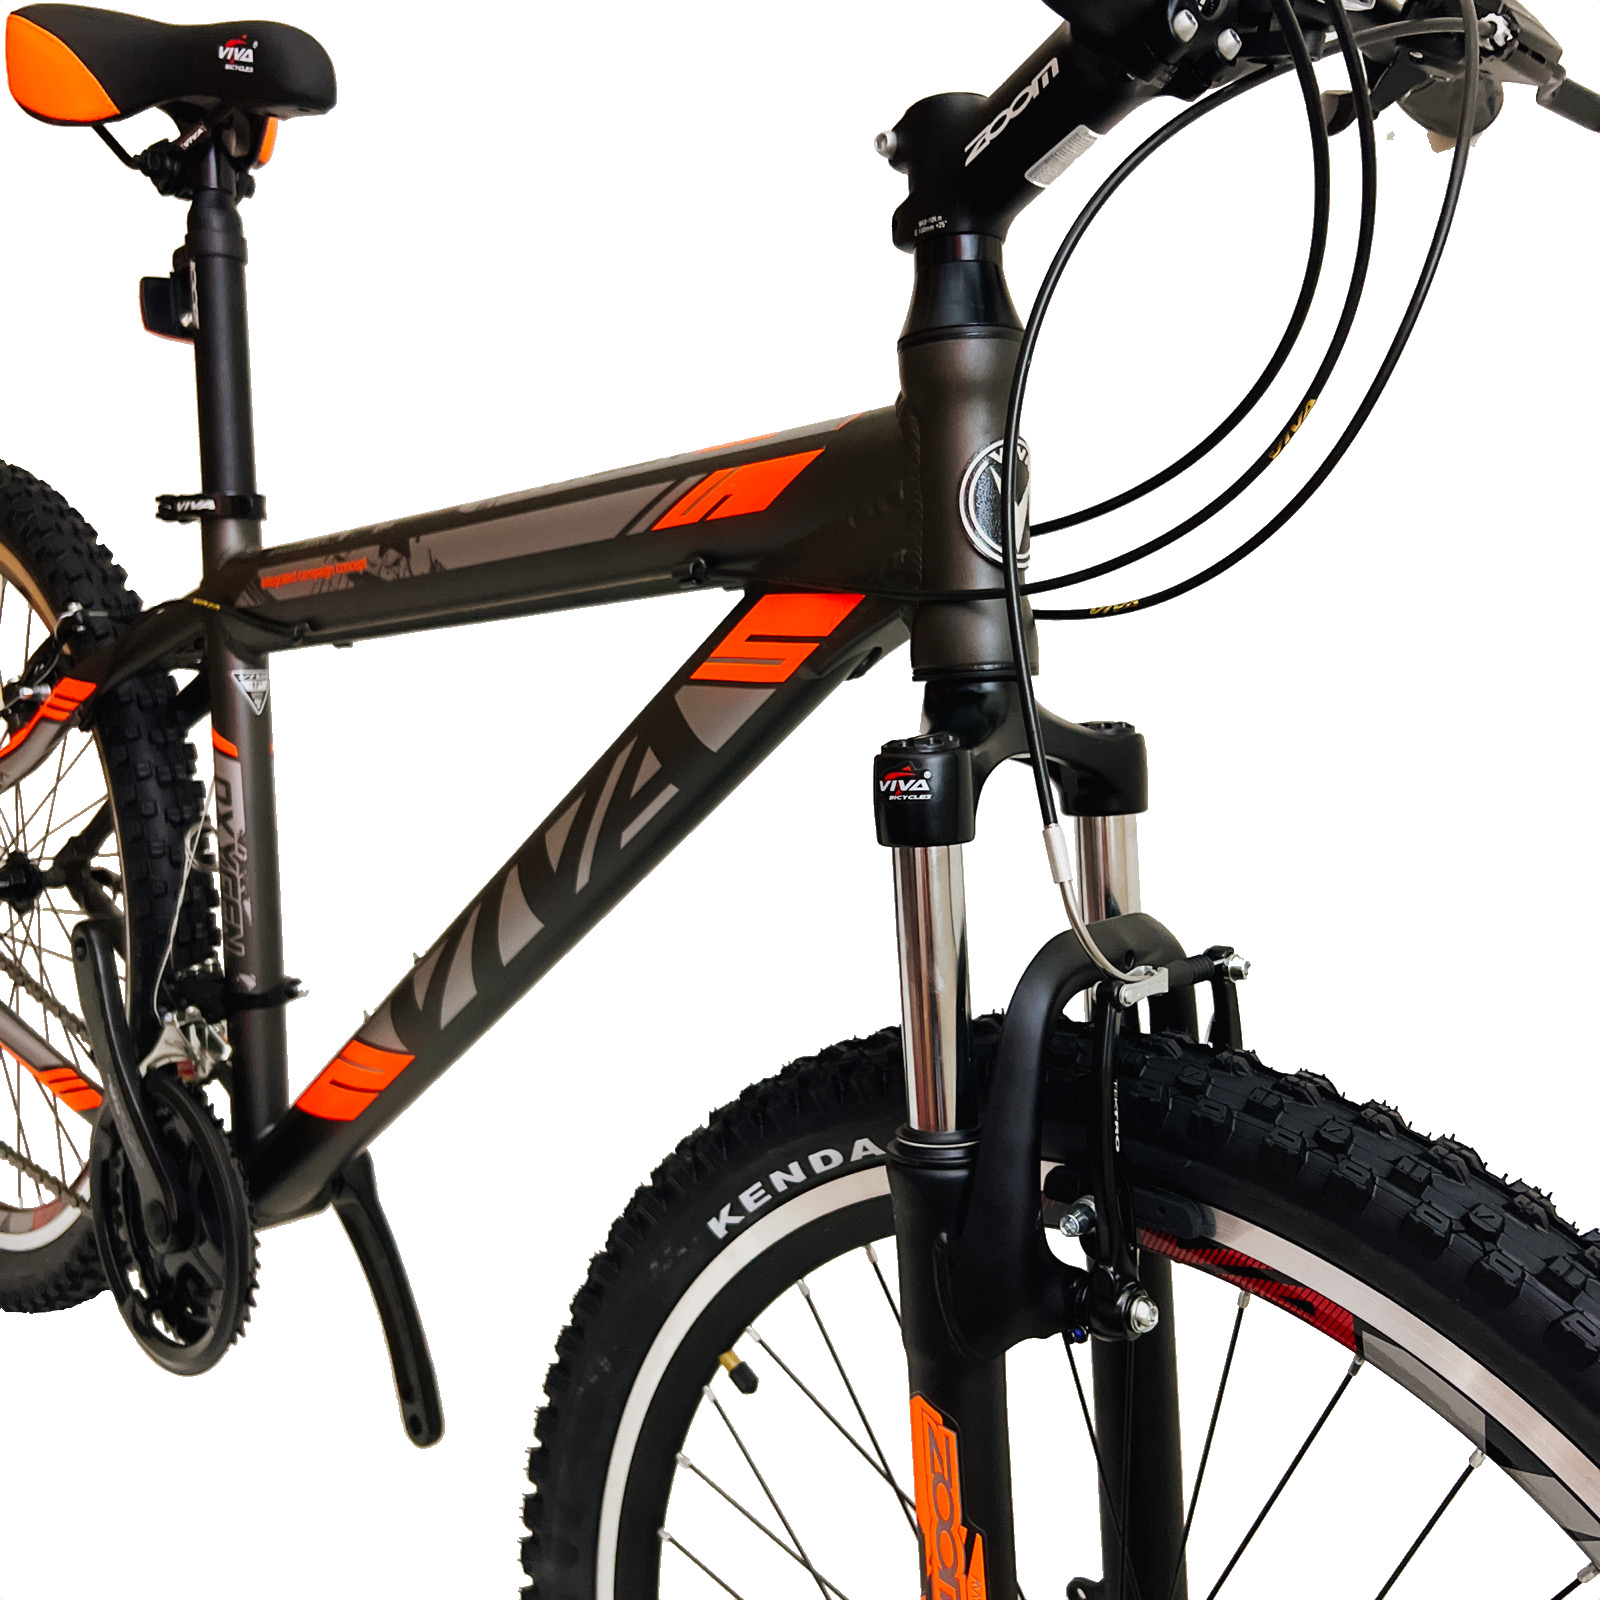 دوچرخه کوهستان ویوا مدل OXYGEN کد 100 سایز 26 -  - 7